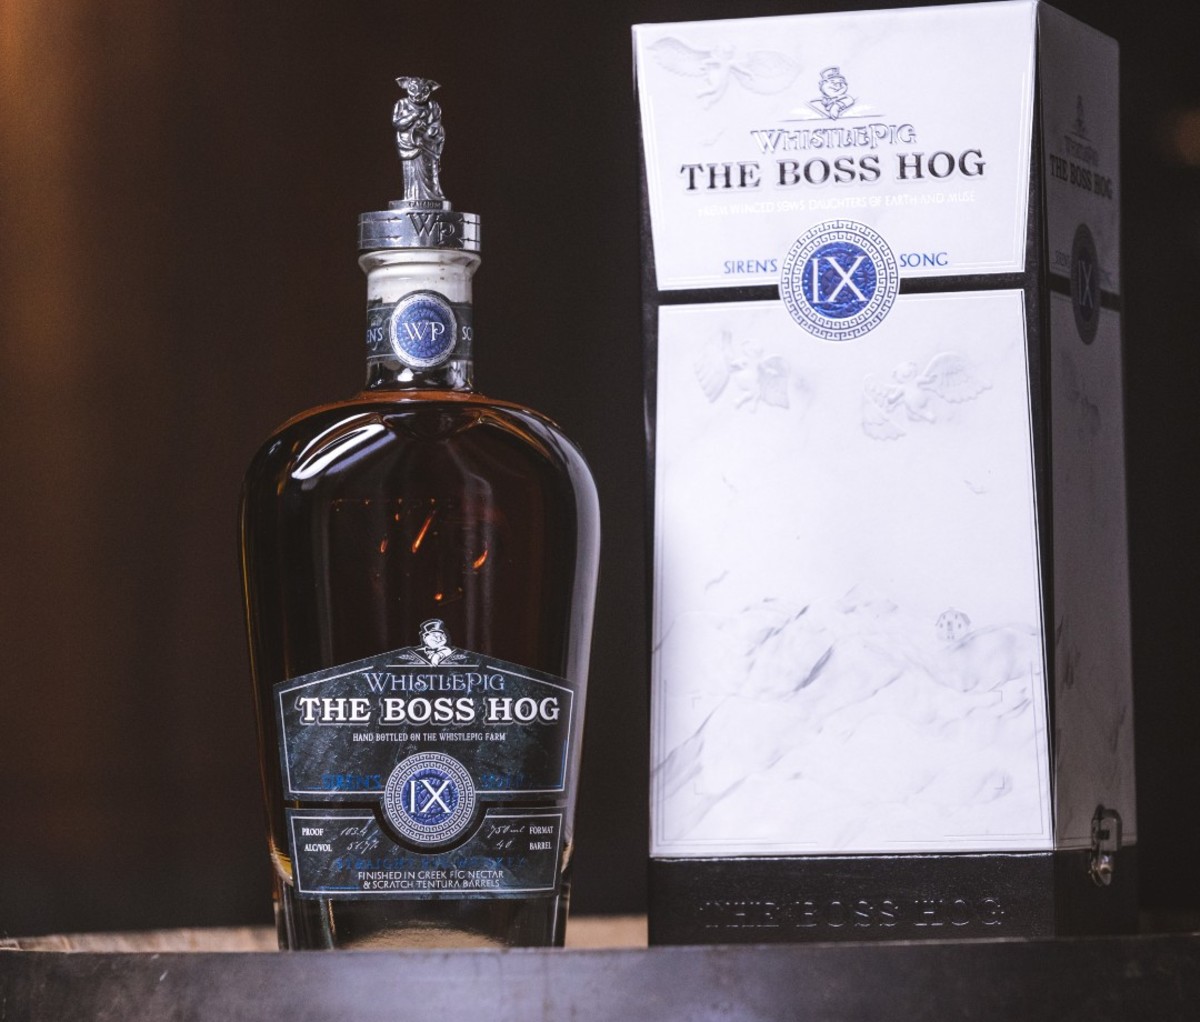 Bottle of WhistlePig Boss Hog IX: Siren's Song next to packaging box